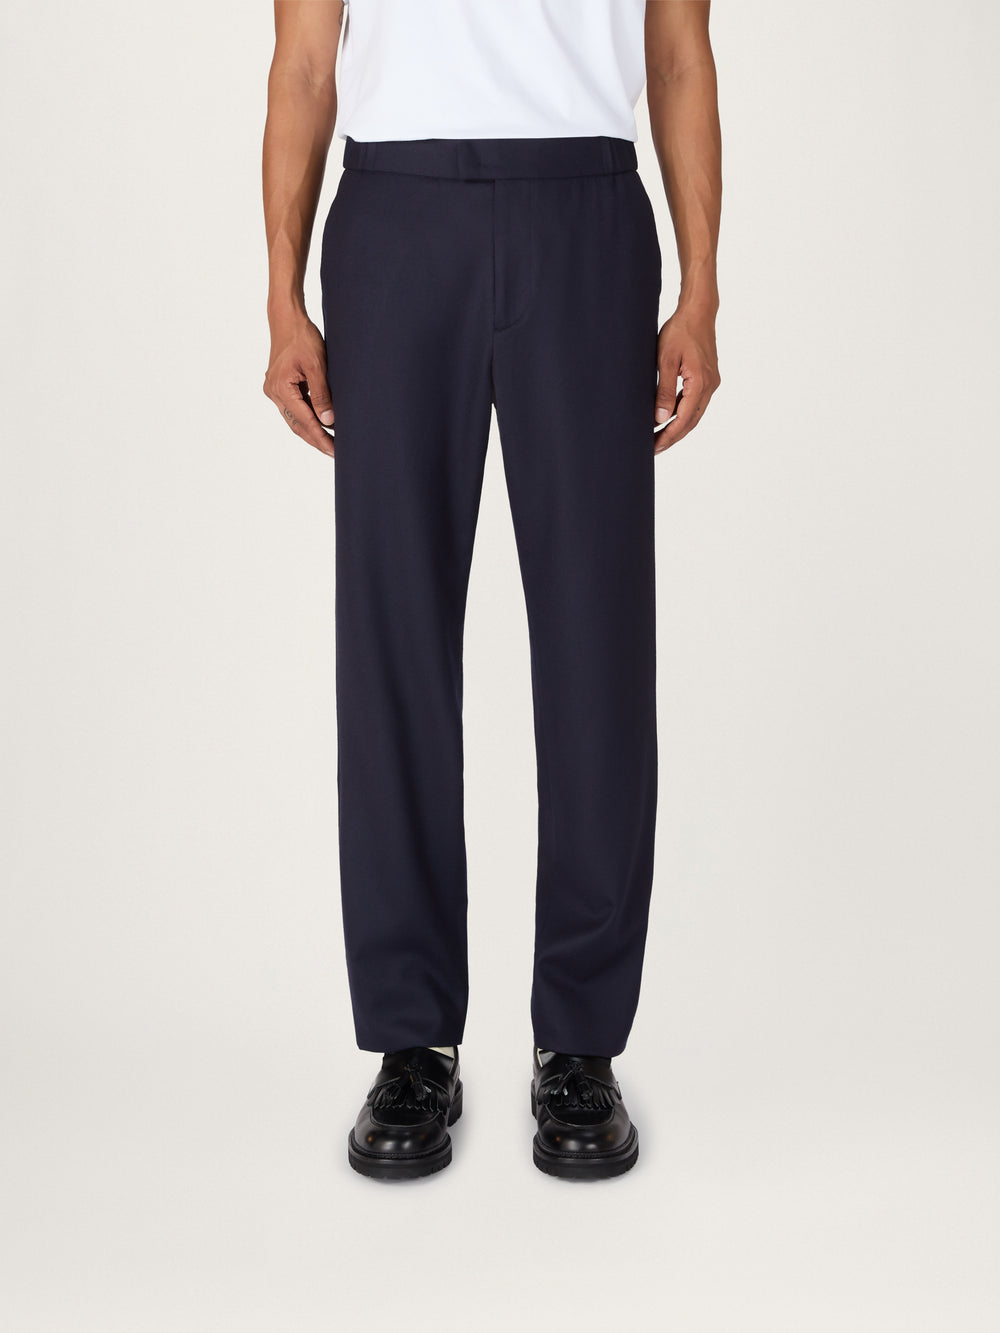 3245 OLGA Tricot Warm Up Pants Navy - The Uniform Store